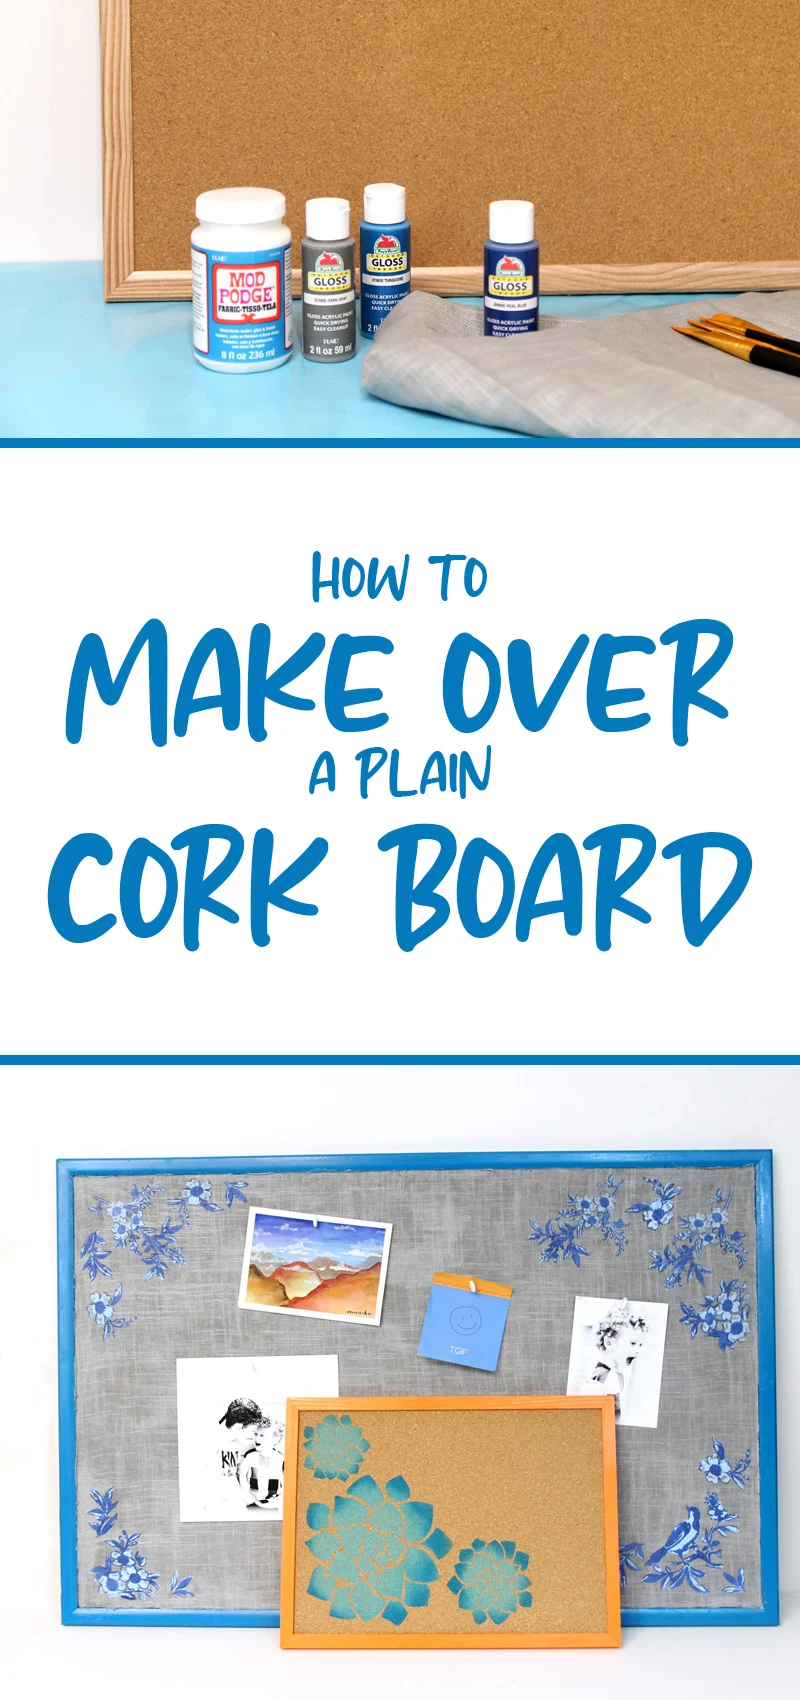 DIY cork board makeover ideas collage image